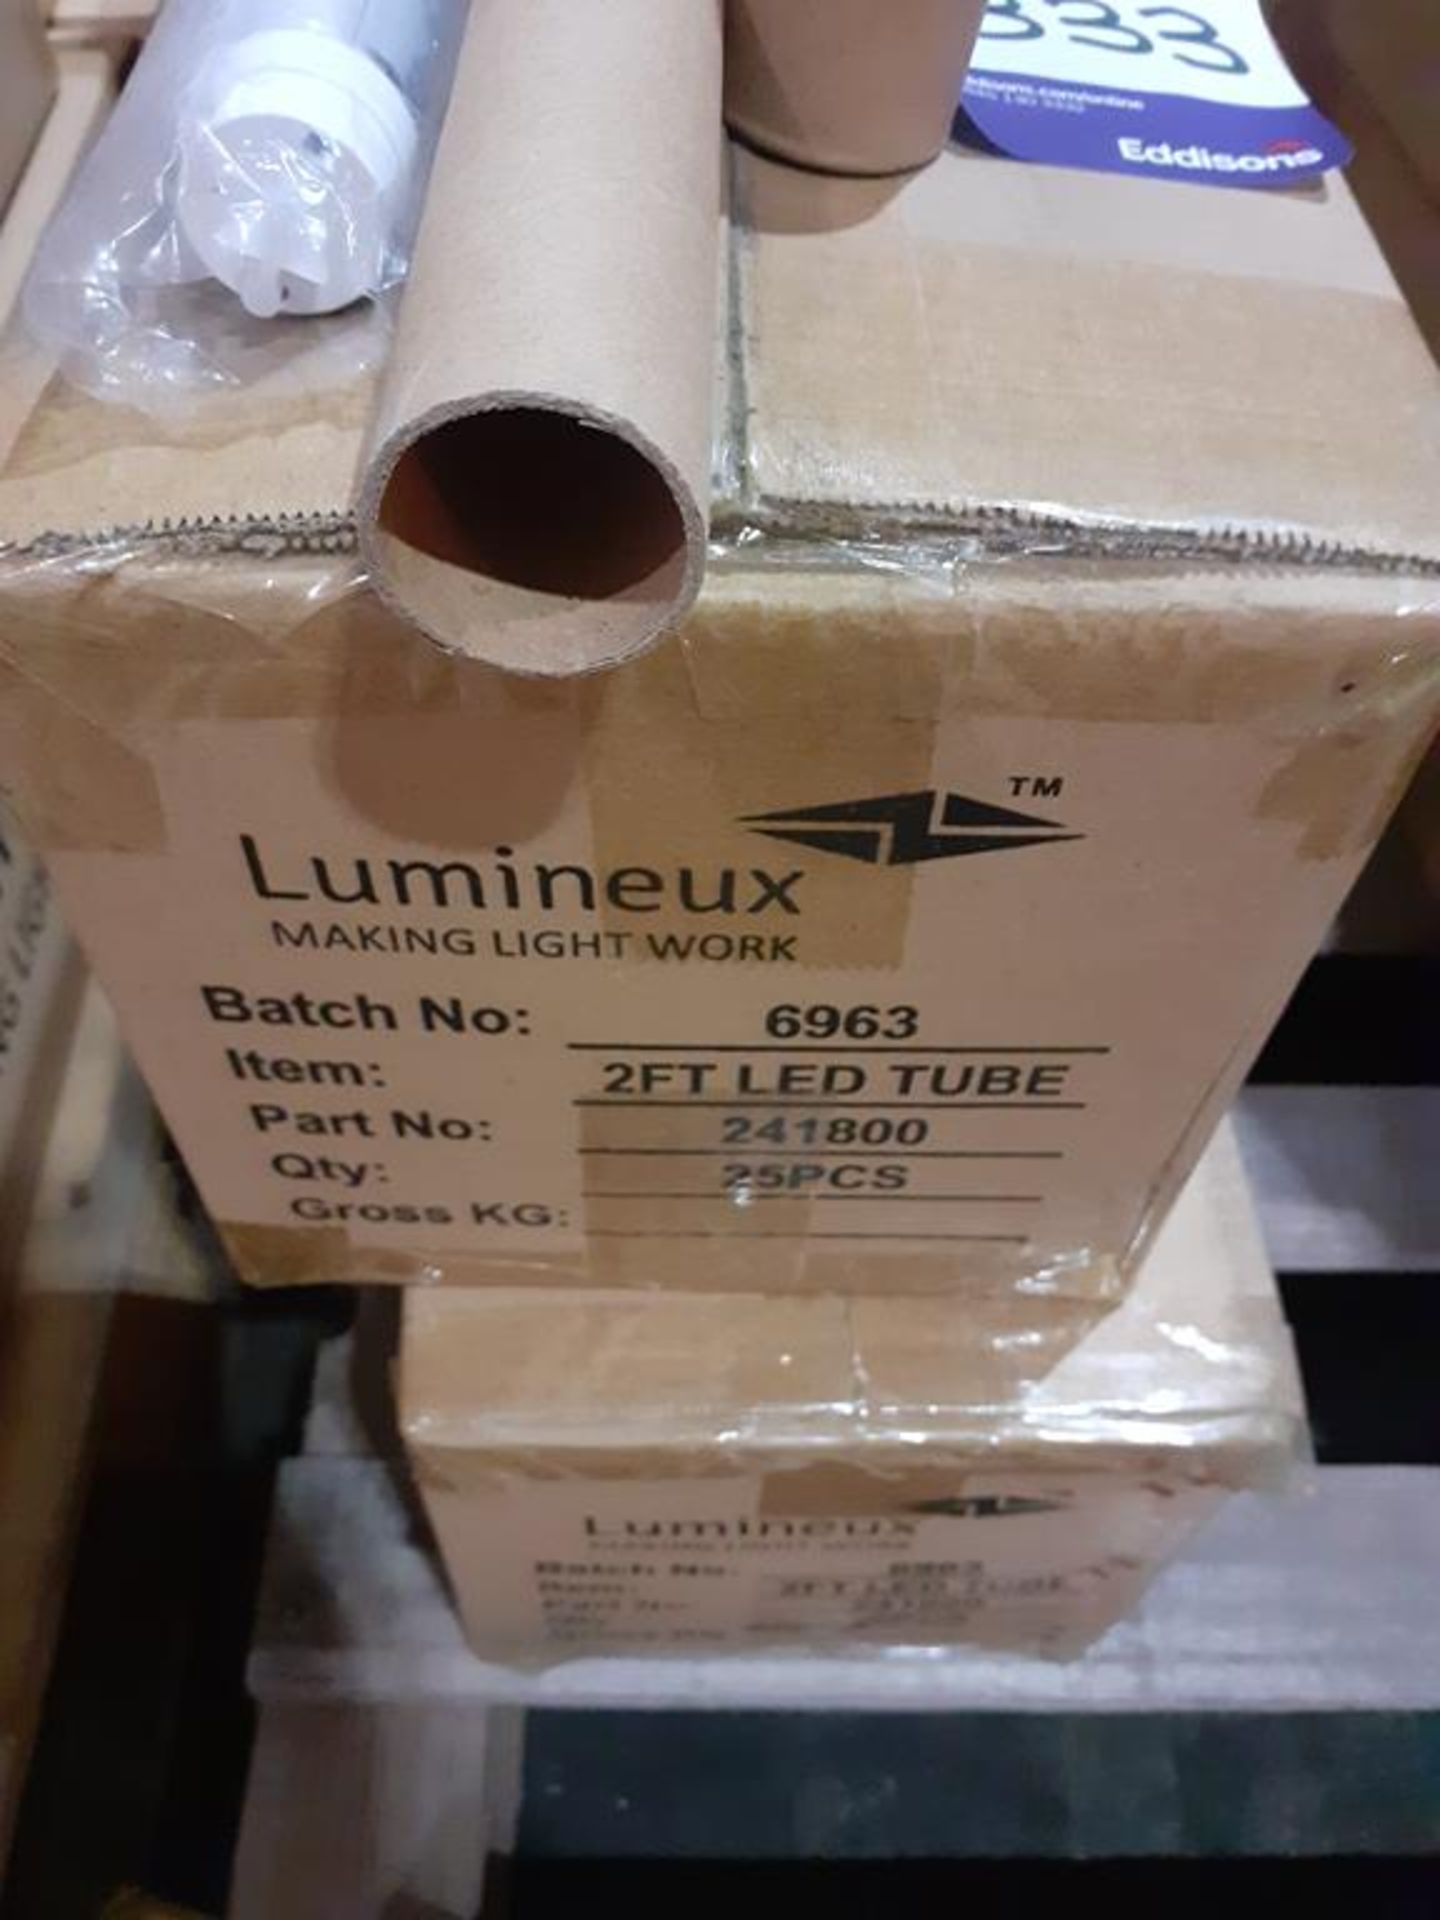 50 x Lumineux 2ft LED Tube 10W 4000K 1050lm 85-265V OEM Trade Price £367 - Image 2 of 3